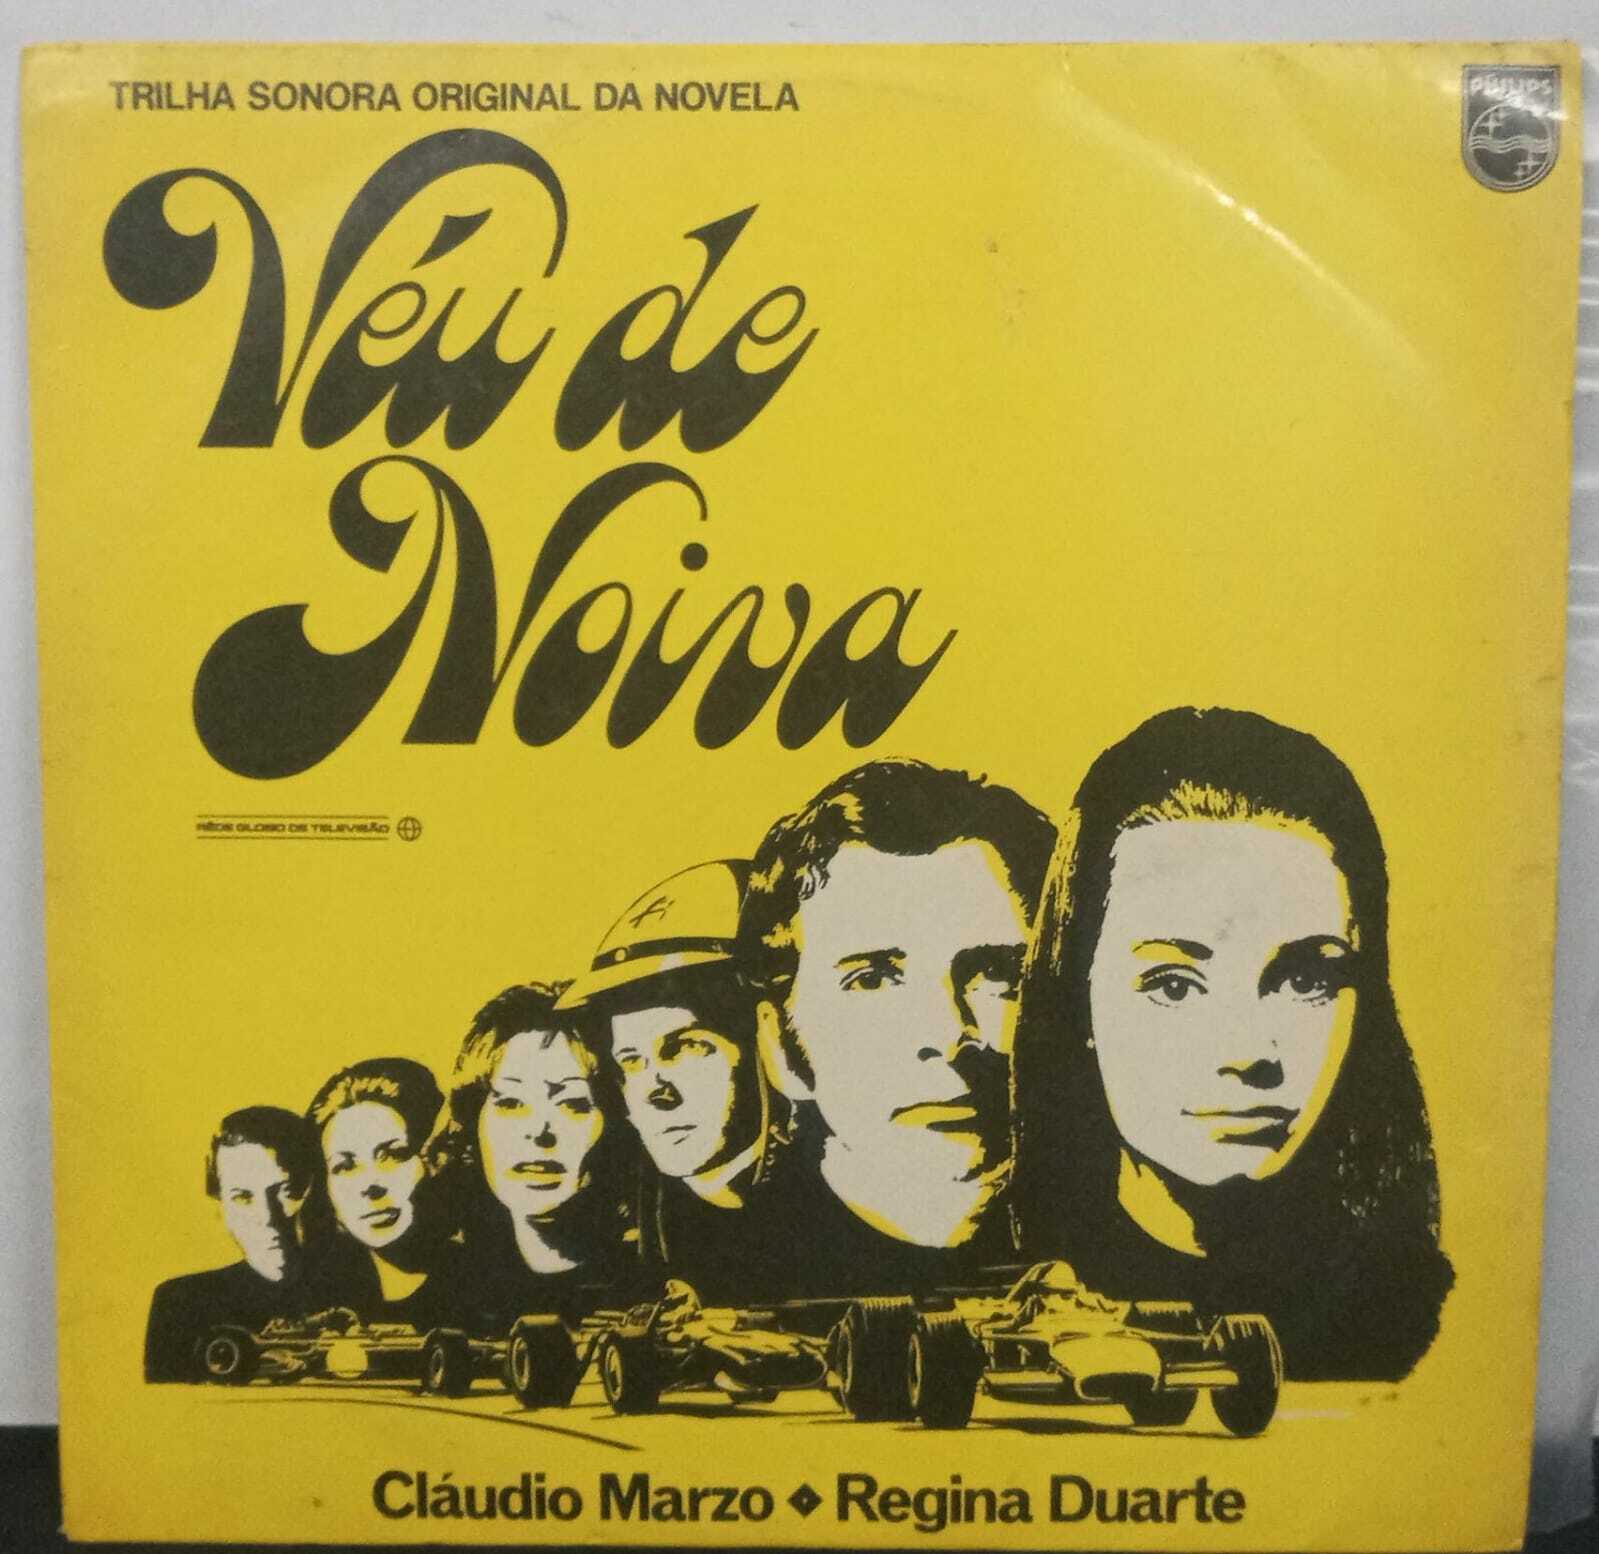 Vinil - Veu De Noiva - Trilha Sonora Original Da Novela